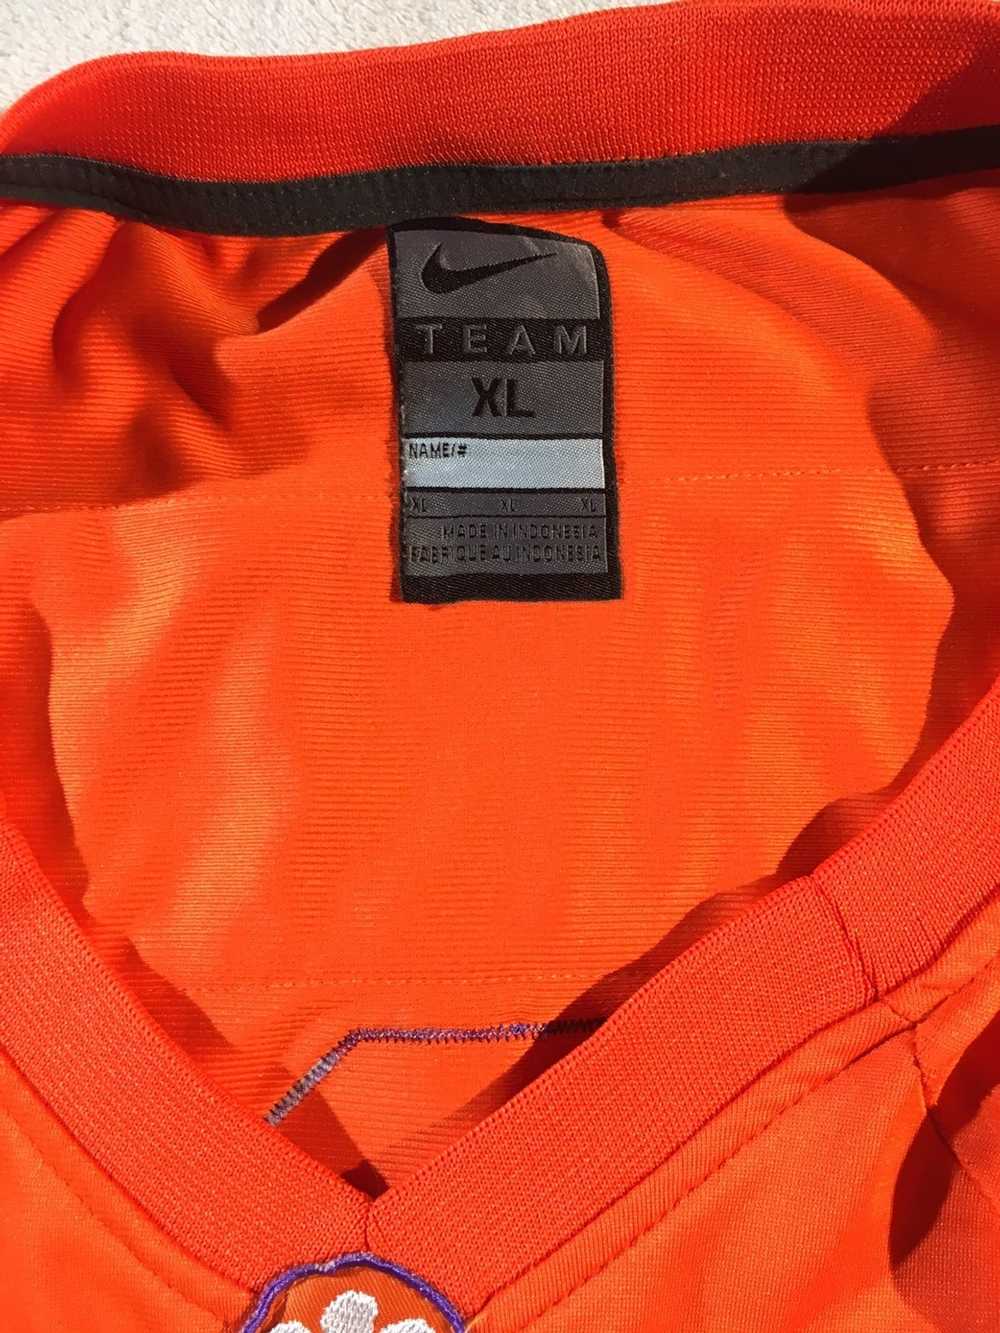 Ncaa × Nike Nike x NCAA x Clemson Tiger Jersey - image 4